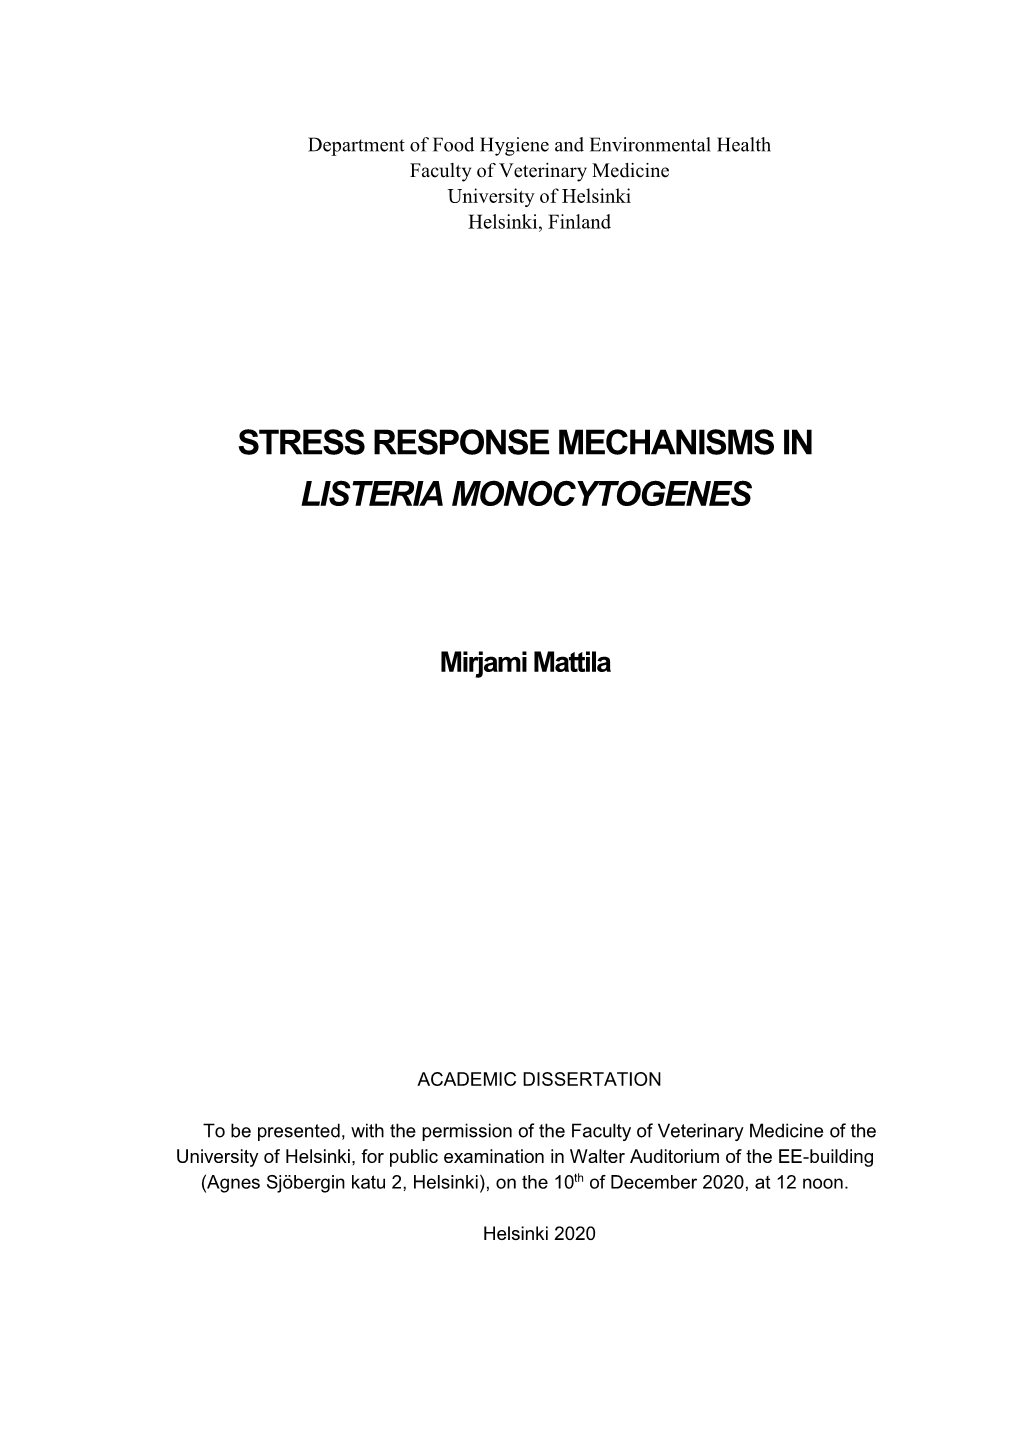 Stress Response Mechanisms in Listeria Monocytogenes